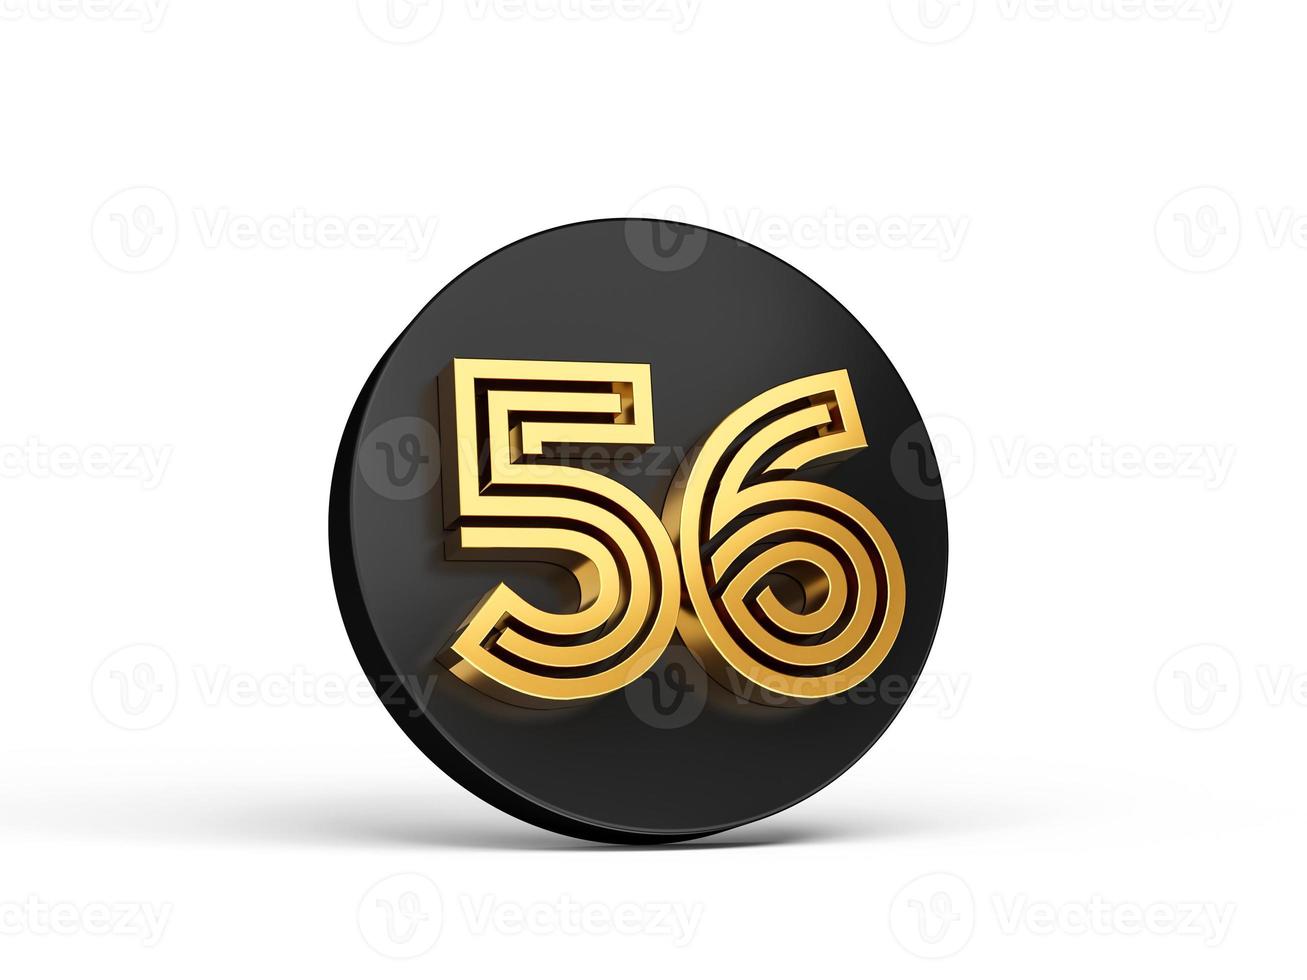 Royal Gold Modern Font. Elite 3D Digit Letter 56 Fifty six on Black 3d button icon 3d Illustration photo